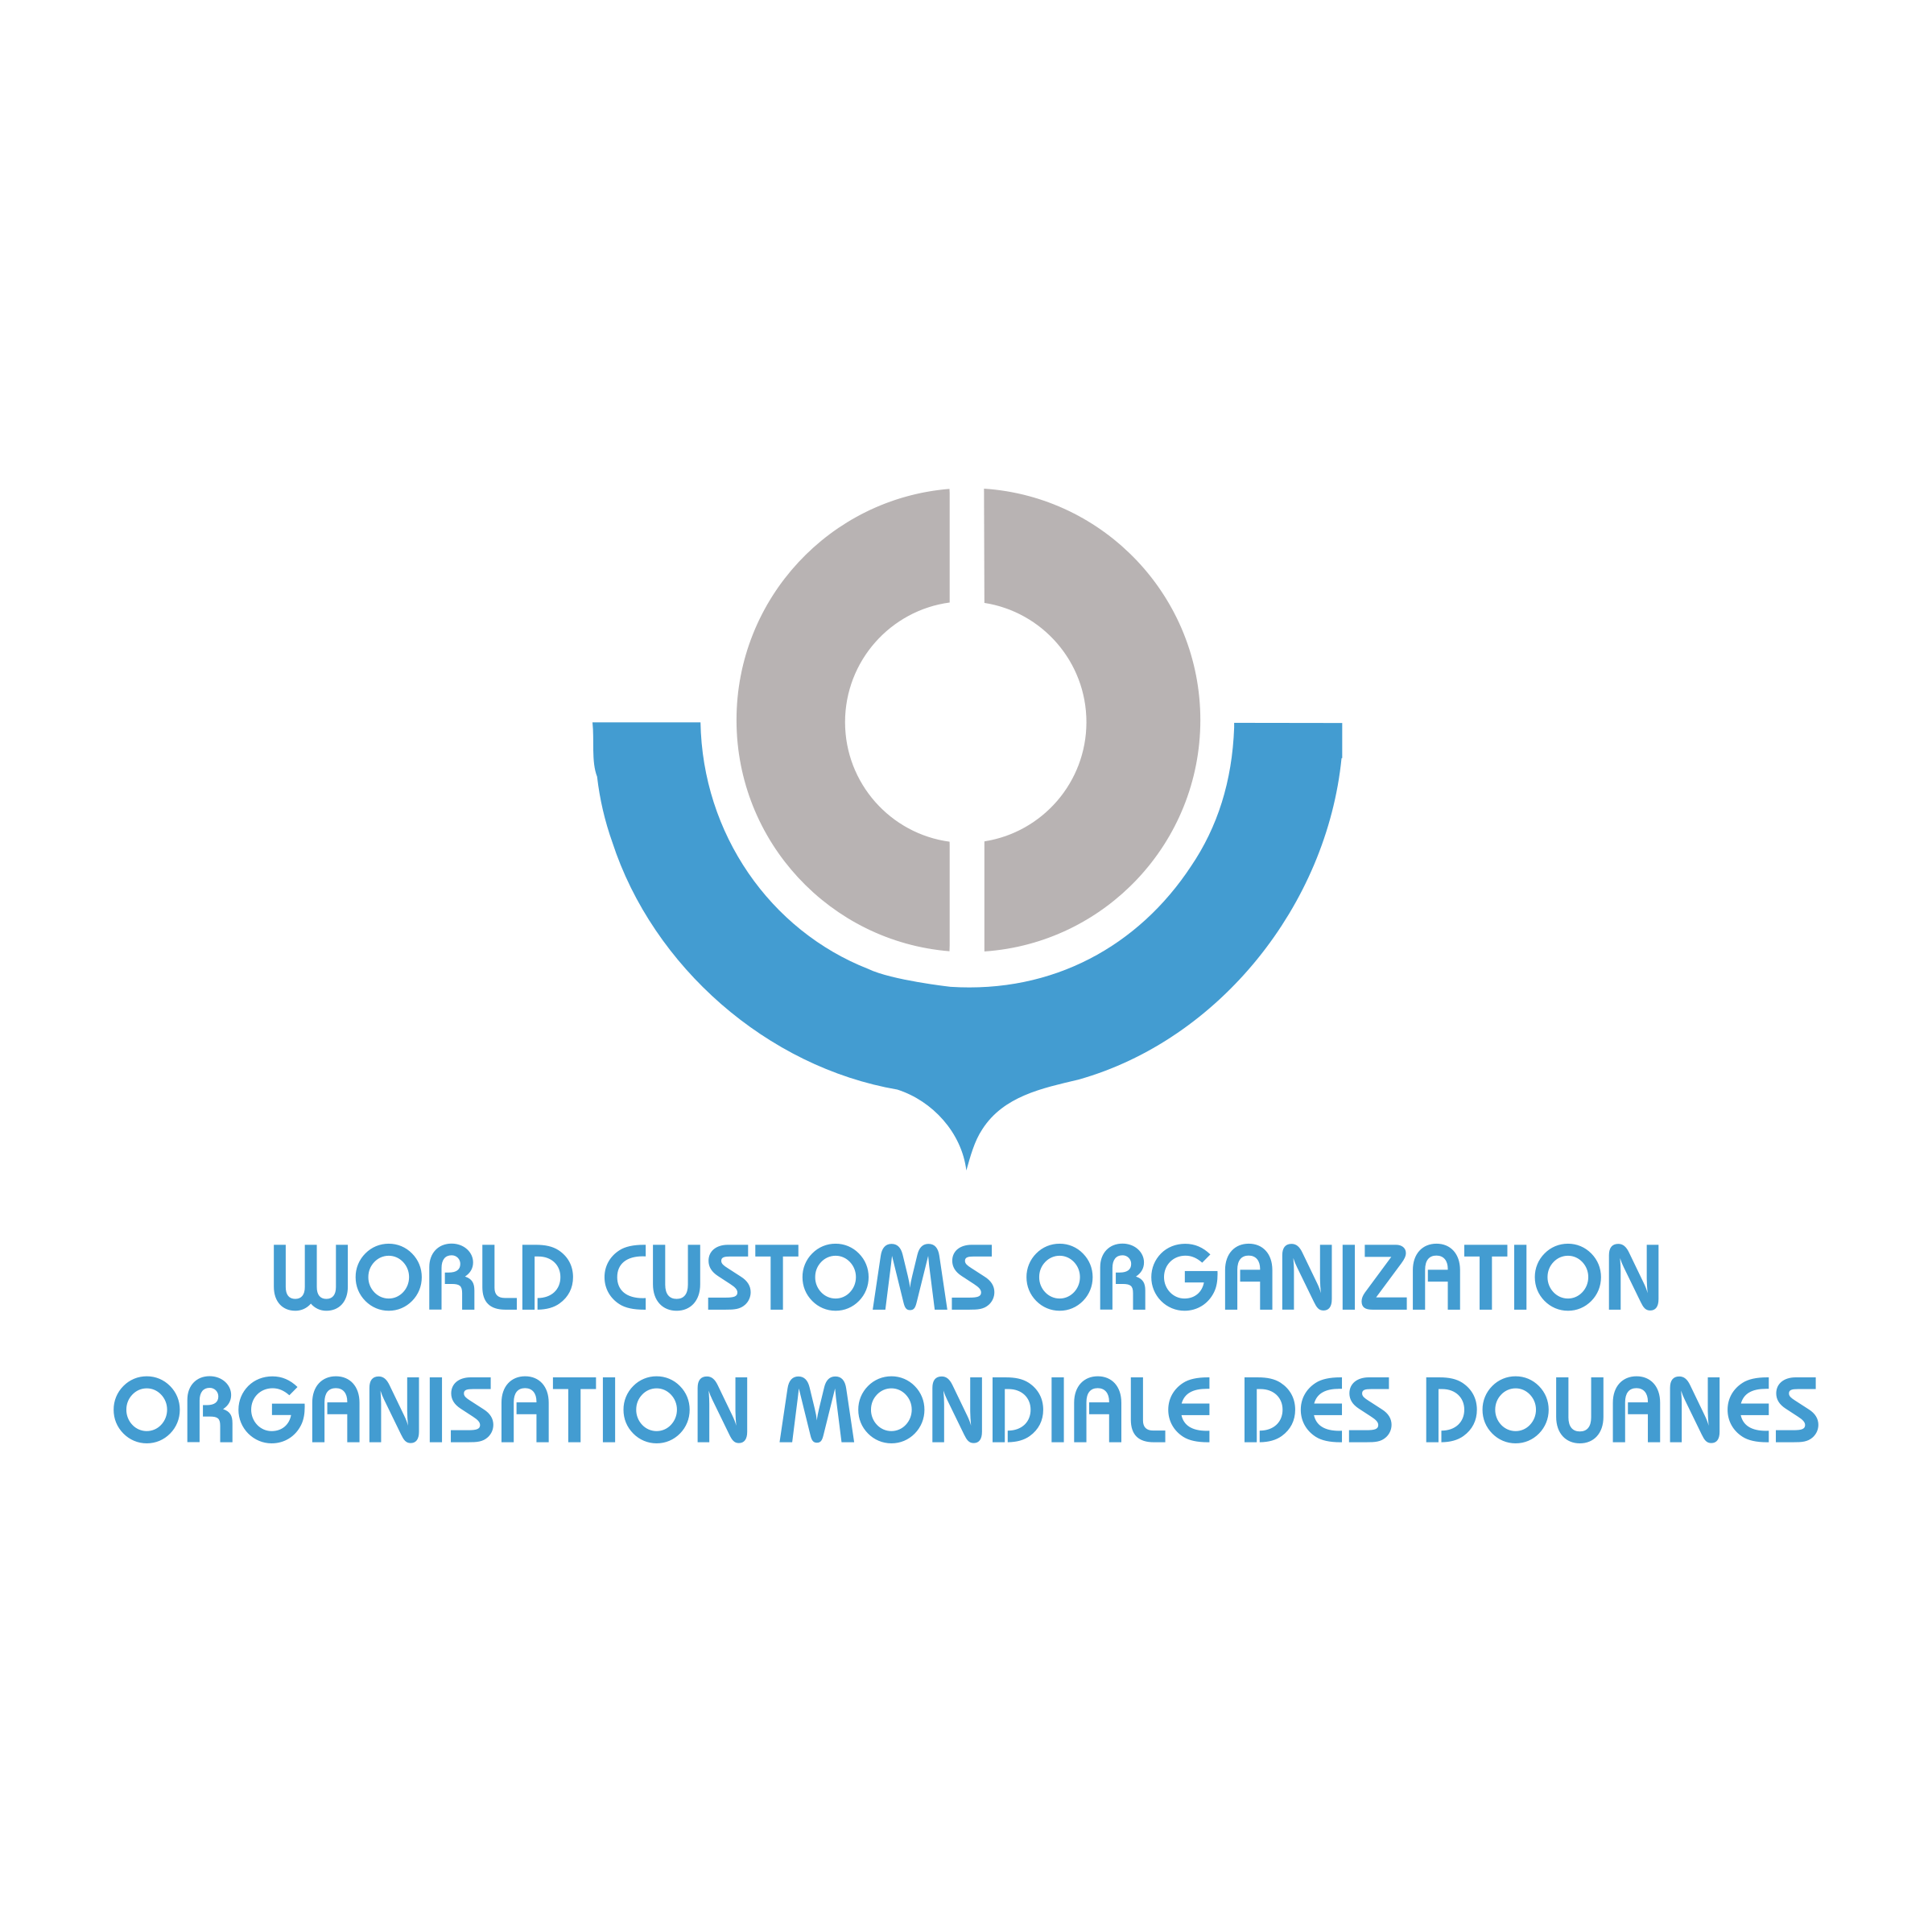 World Organization Logo - World Customs Organization Logo PNG Transparent & SVG Vector